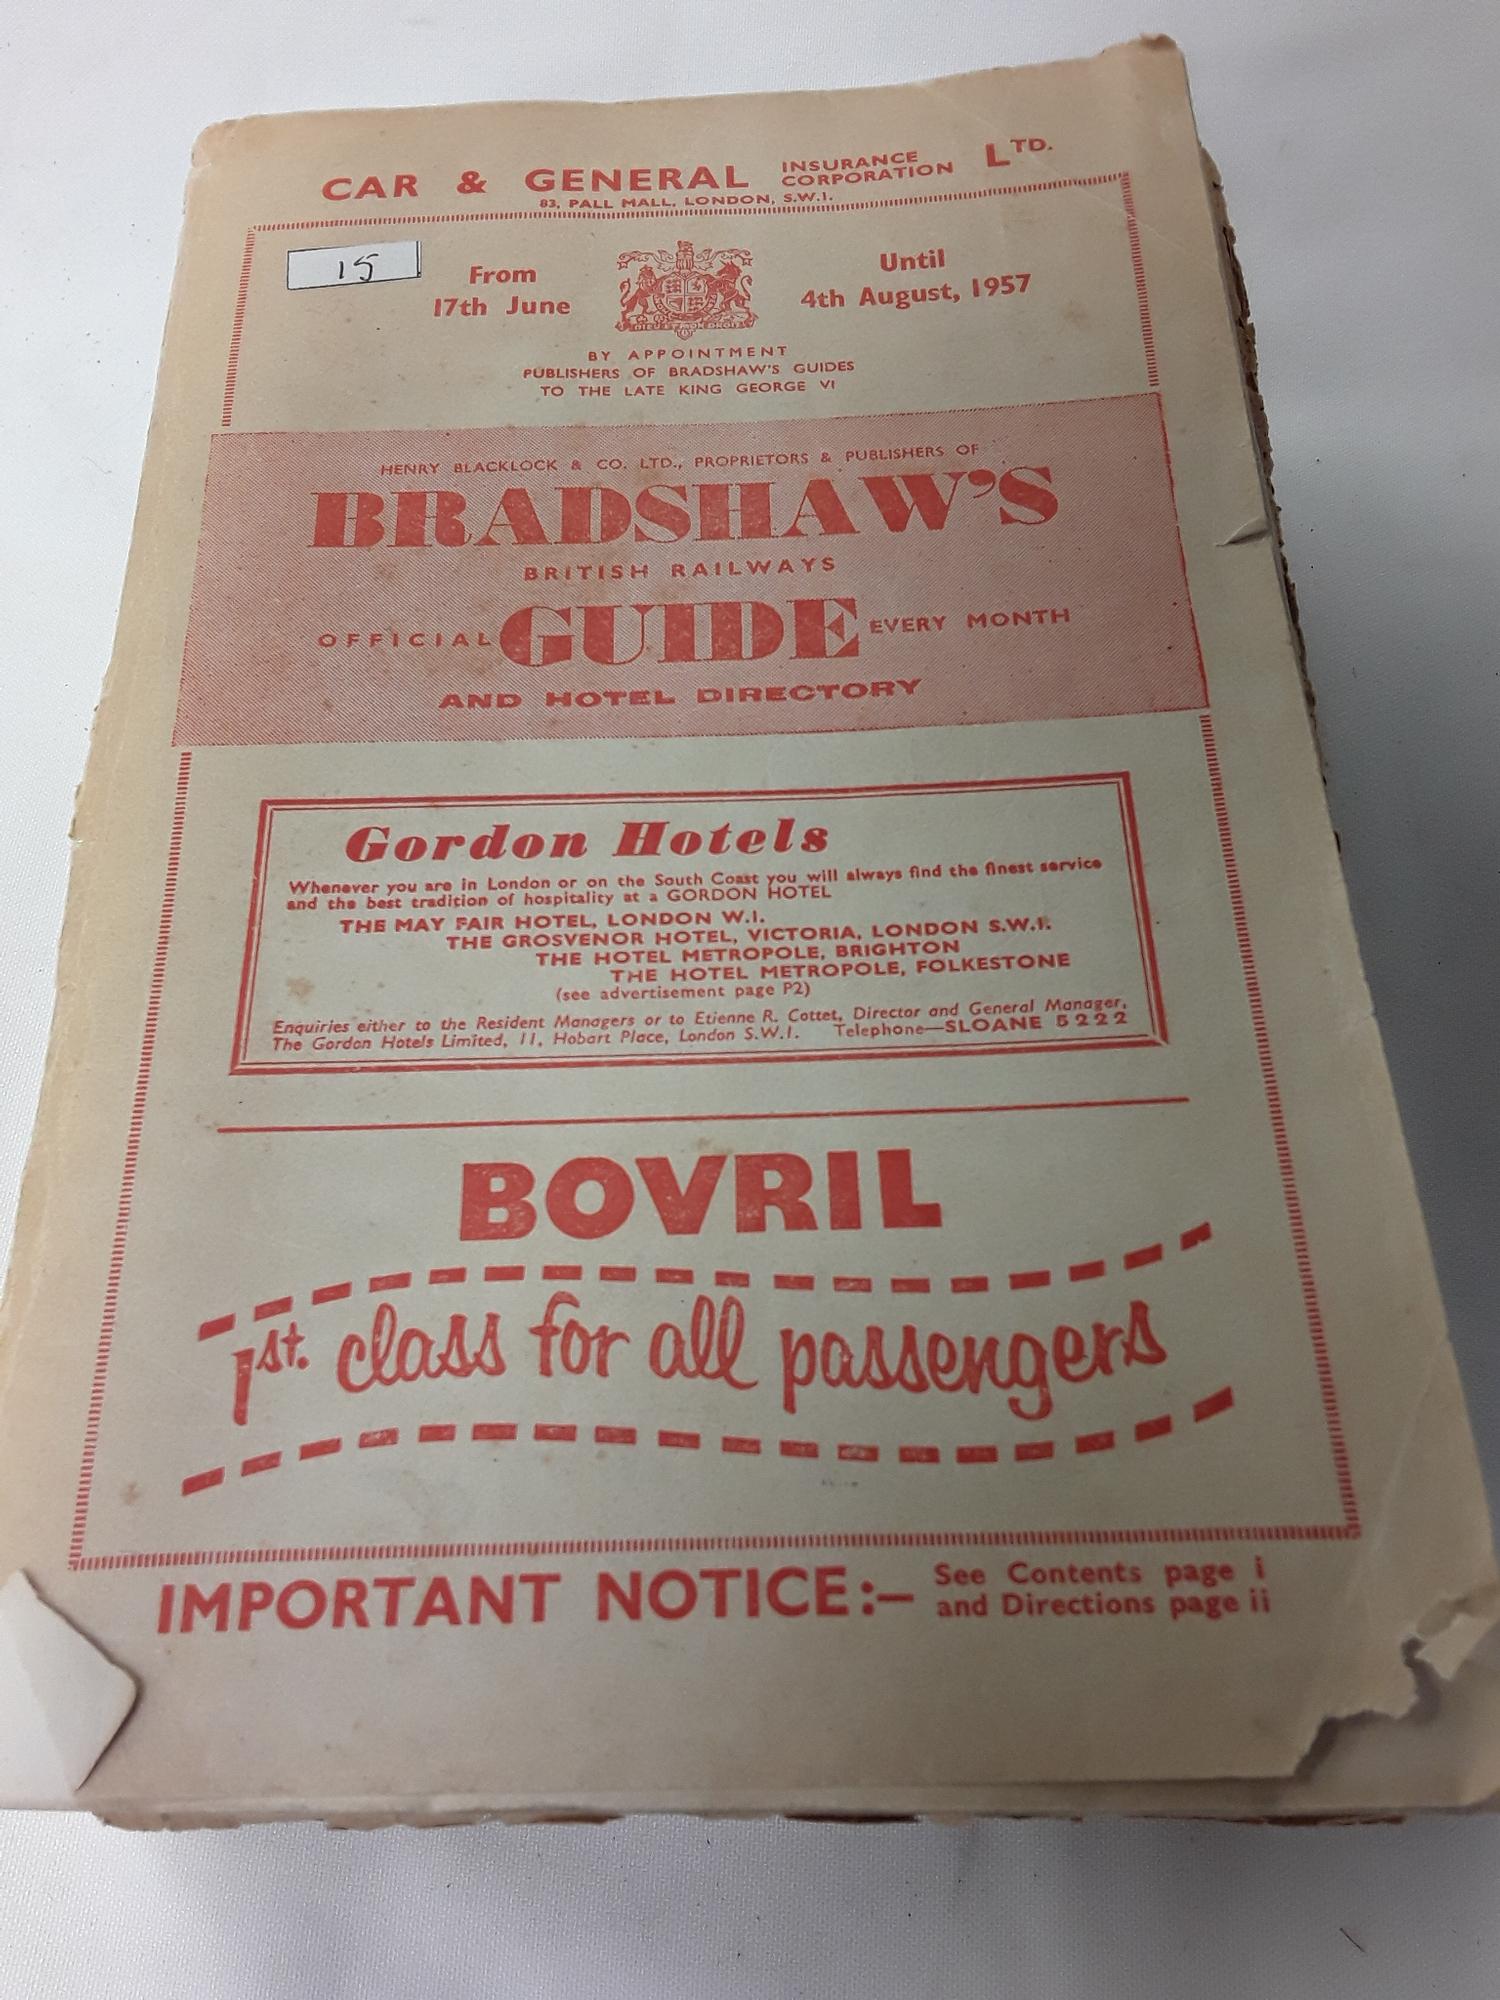 Bradshaw's Guide 17th June until 4th August 1957.